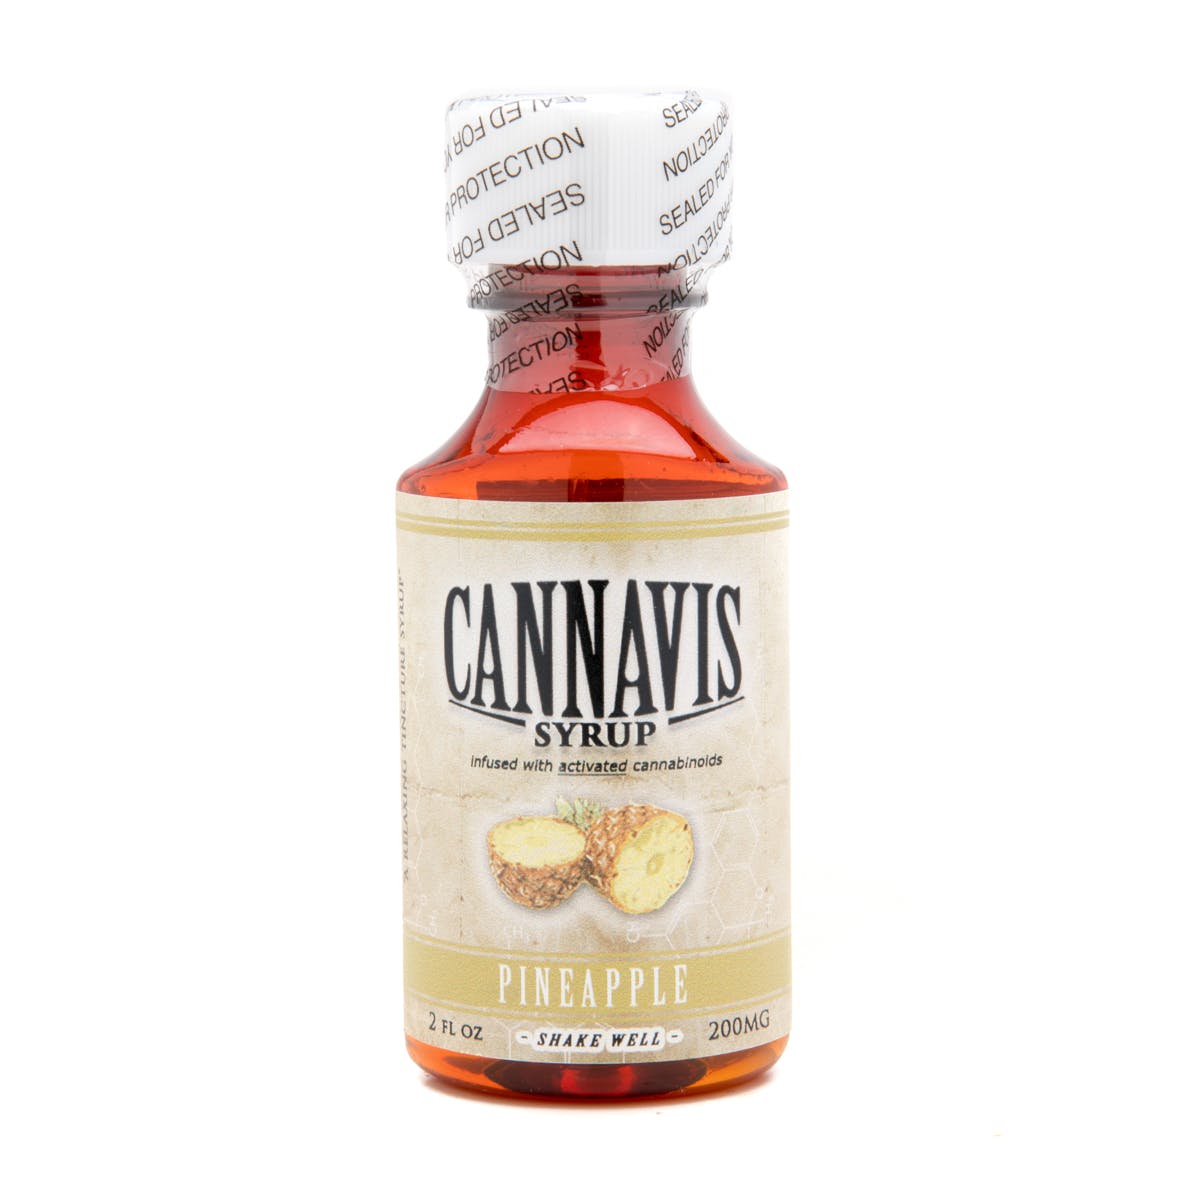 marijuana-dispensaries-bloom-valley-25-cap-in-chatsworth-cannavis-syrup-2c-pineapple-200mg